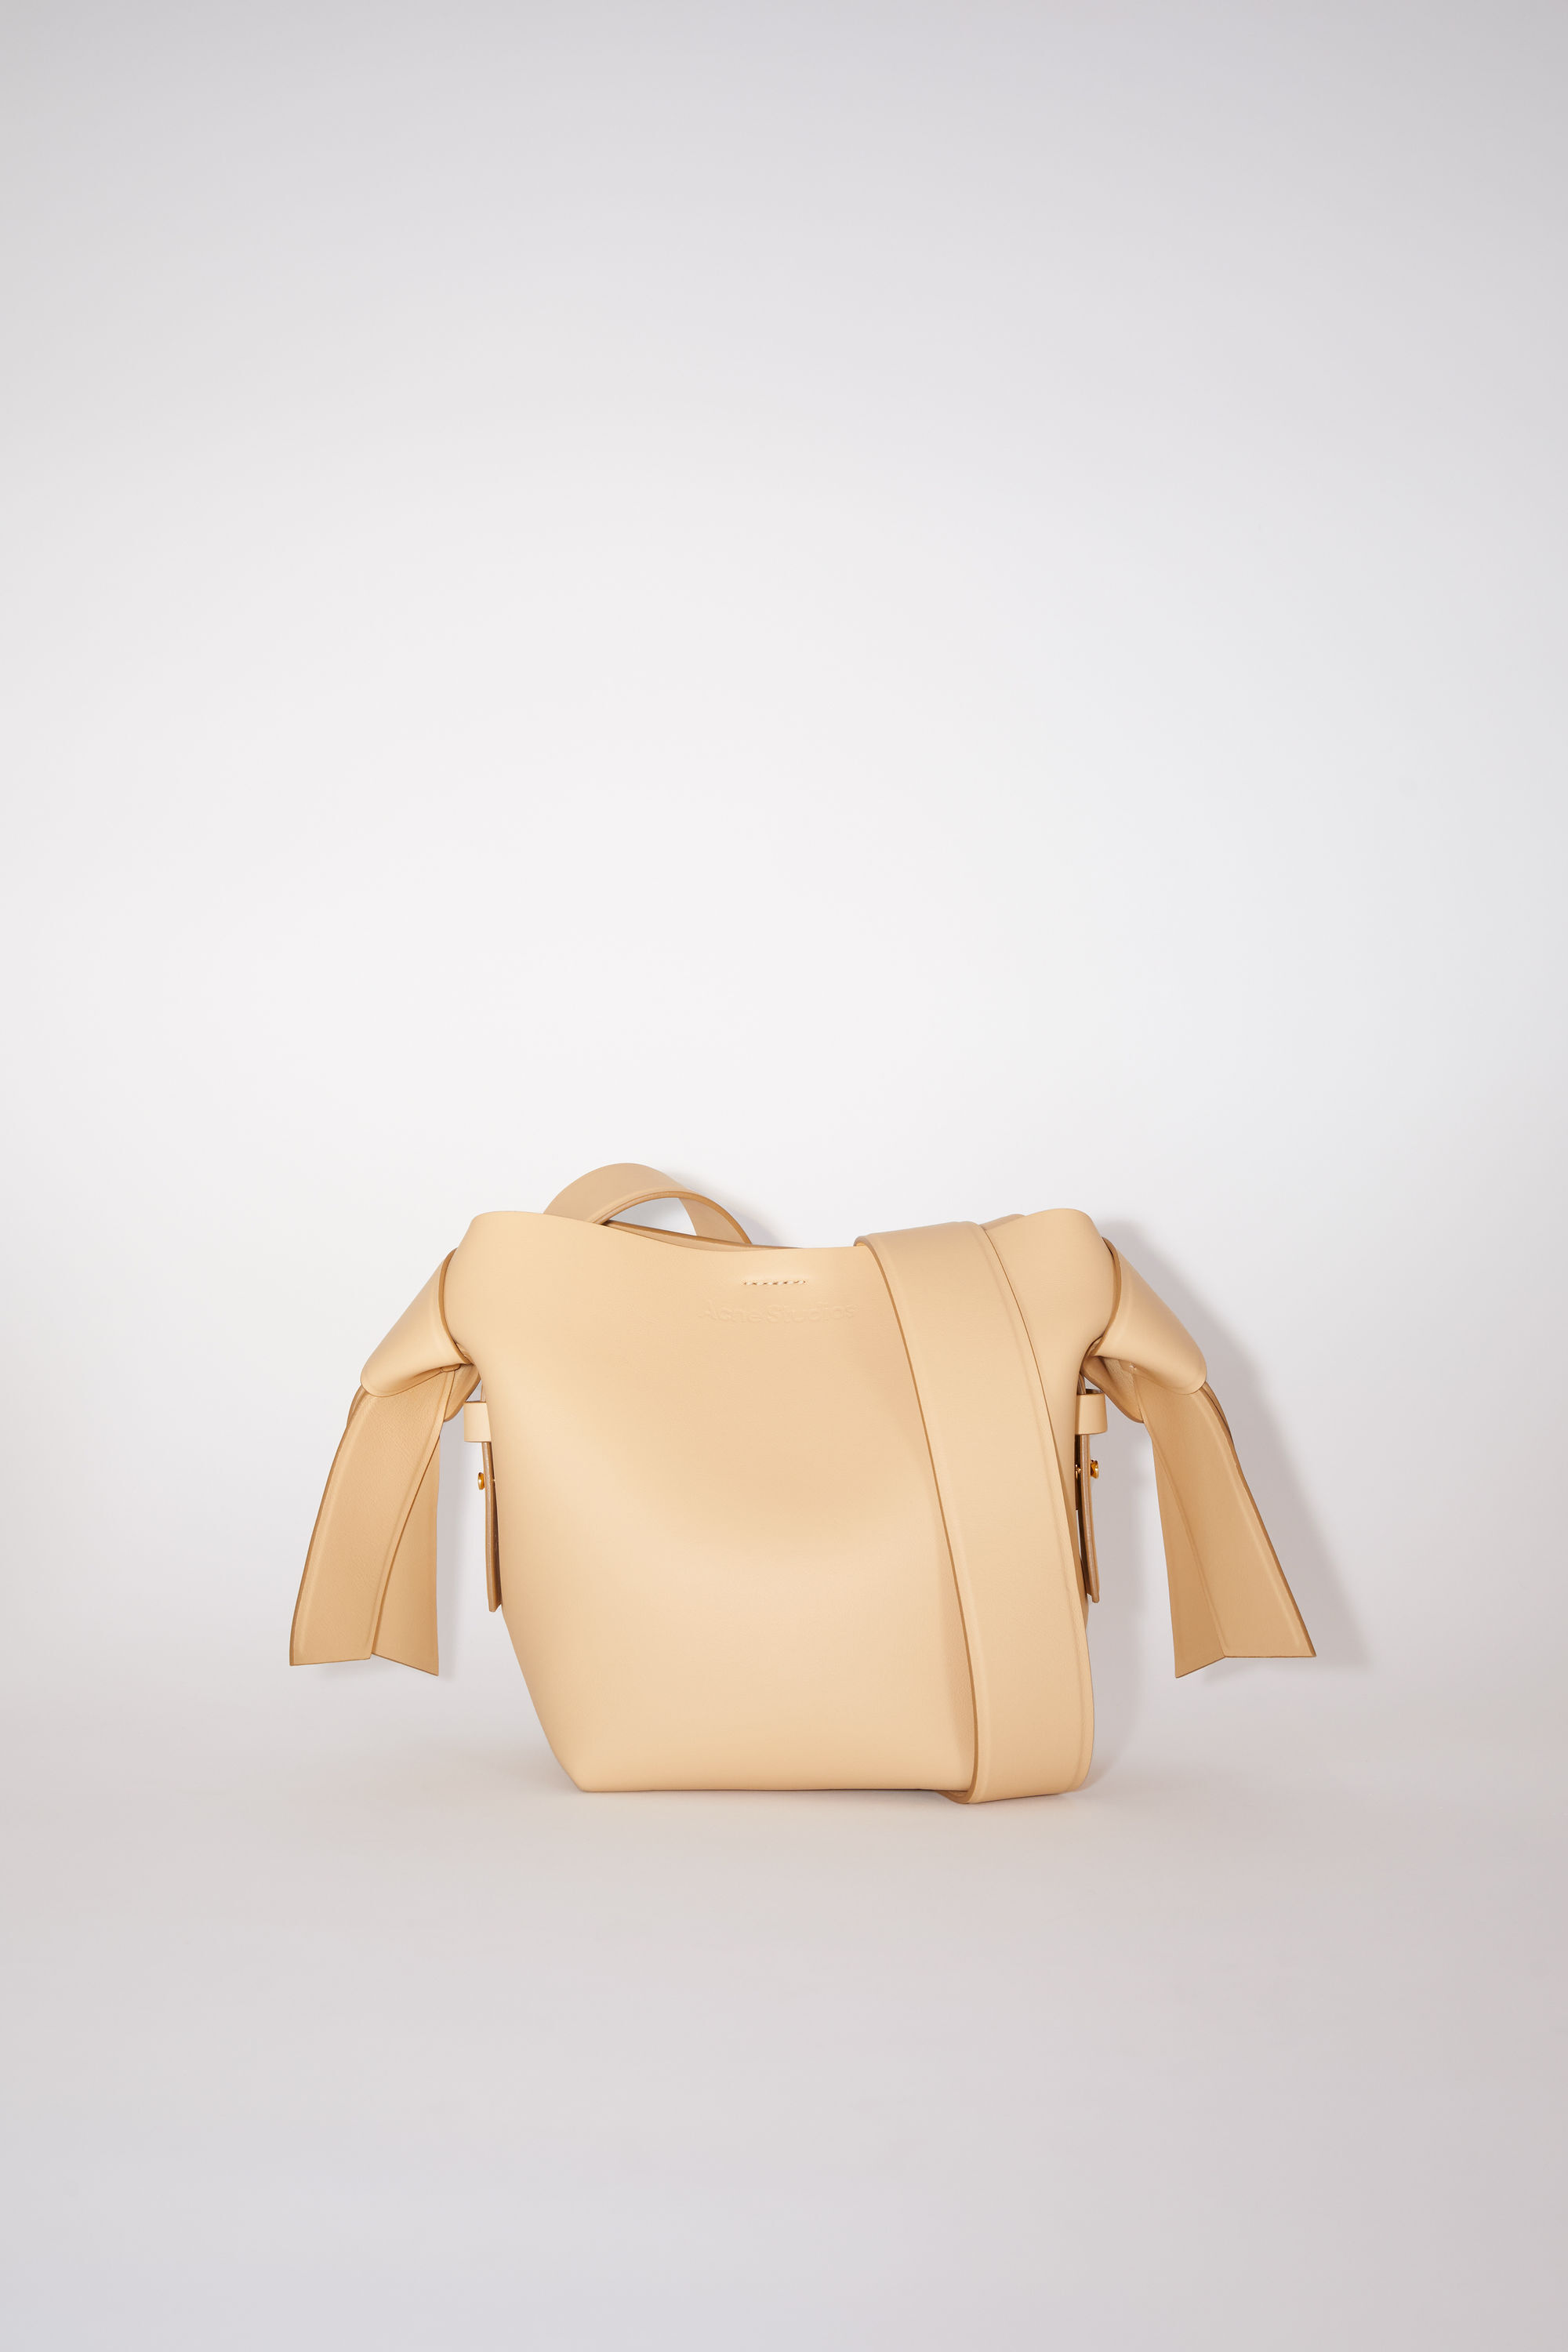 Acne Studios - Musubi mini shoulder bag - Dune beige